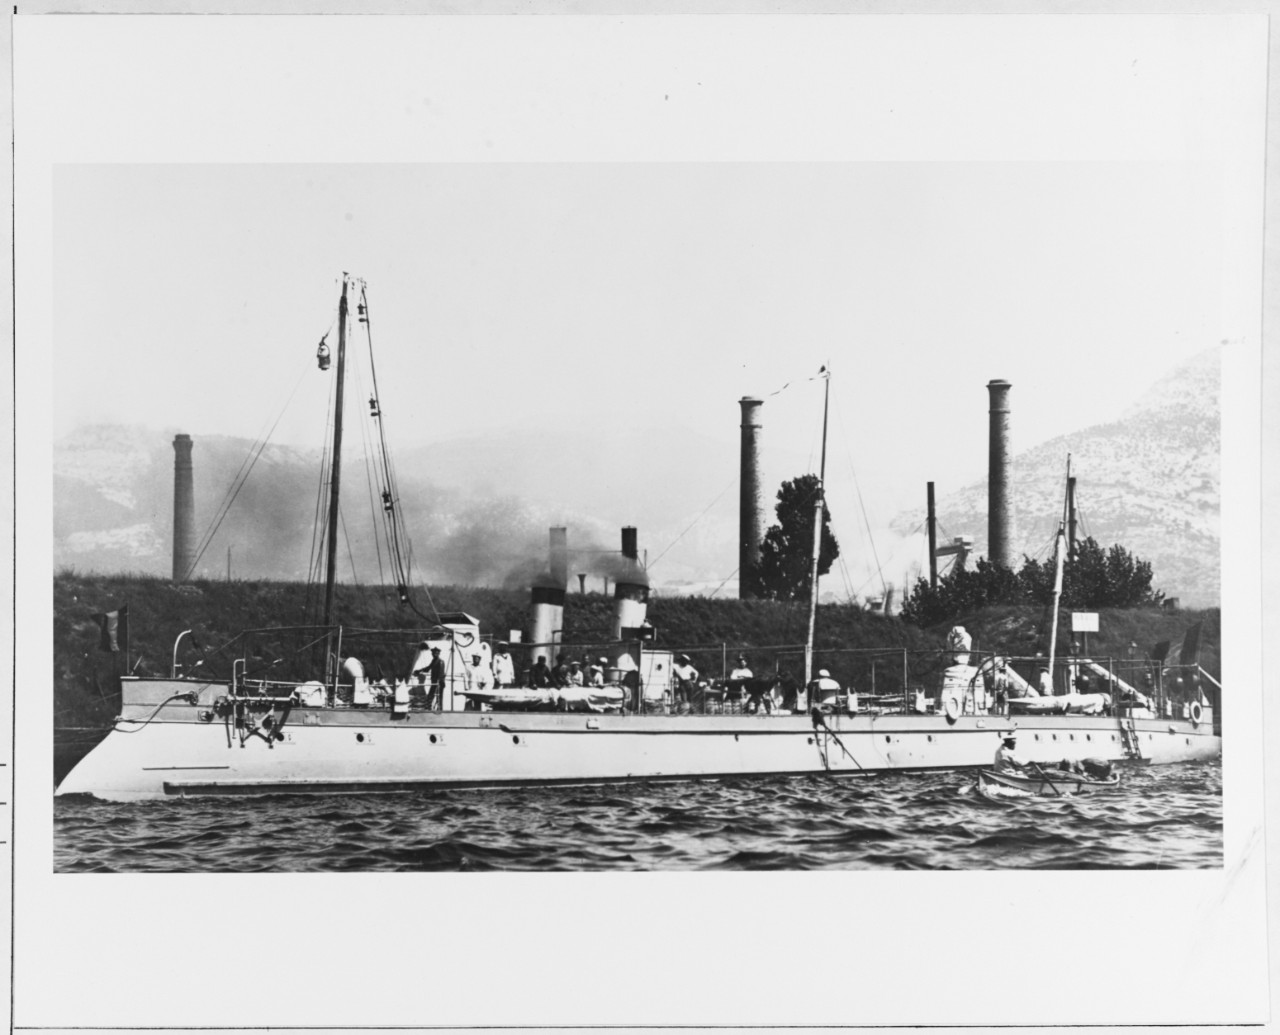 AVENTURIER (French torpedo boat, 1889)